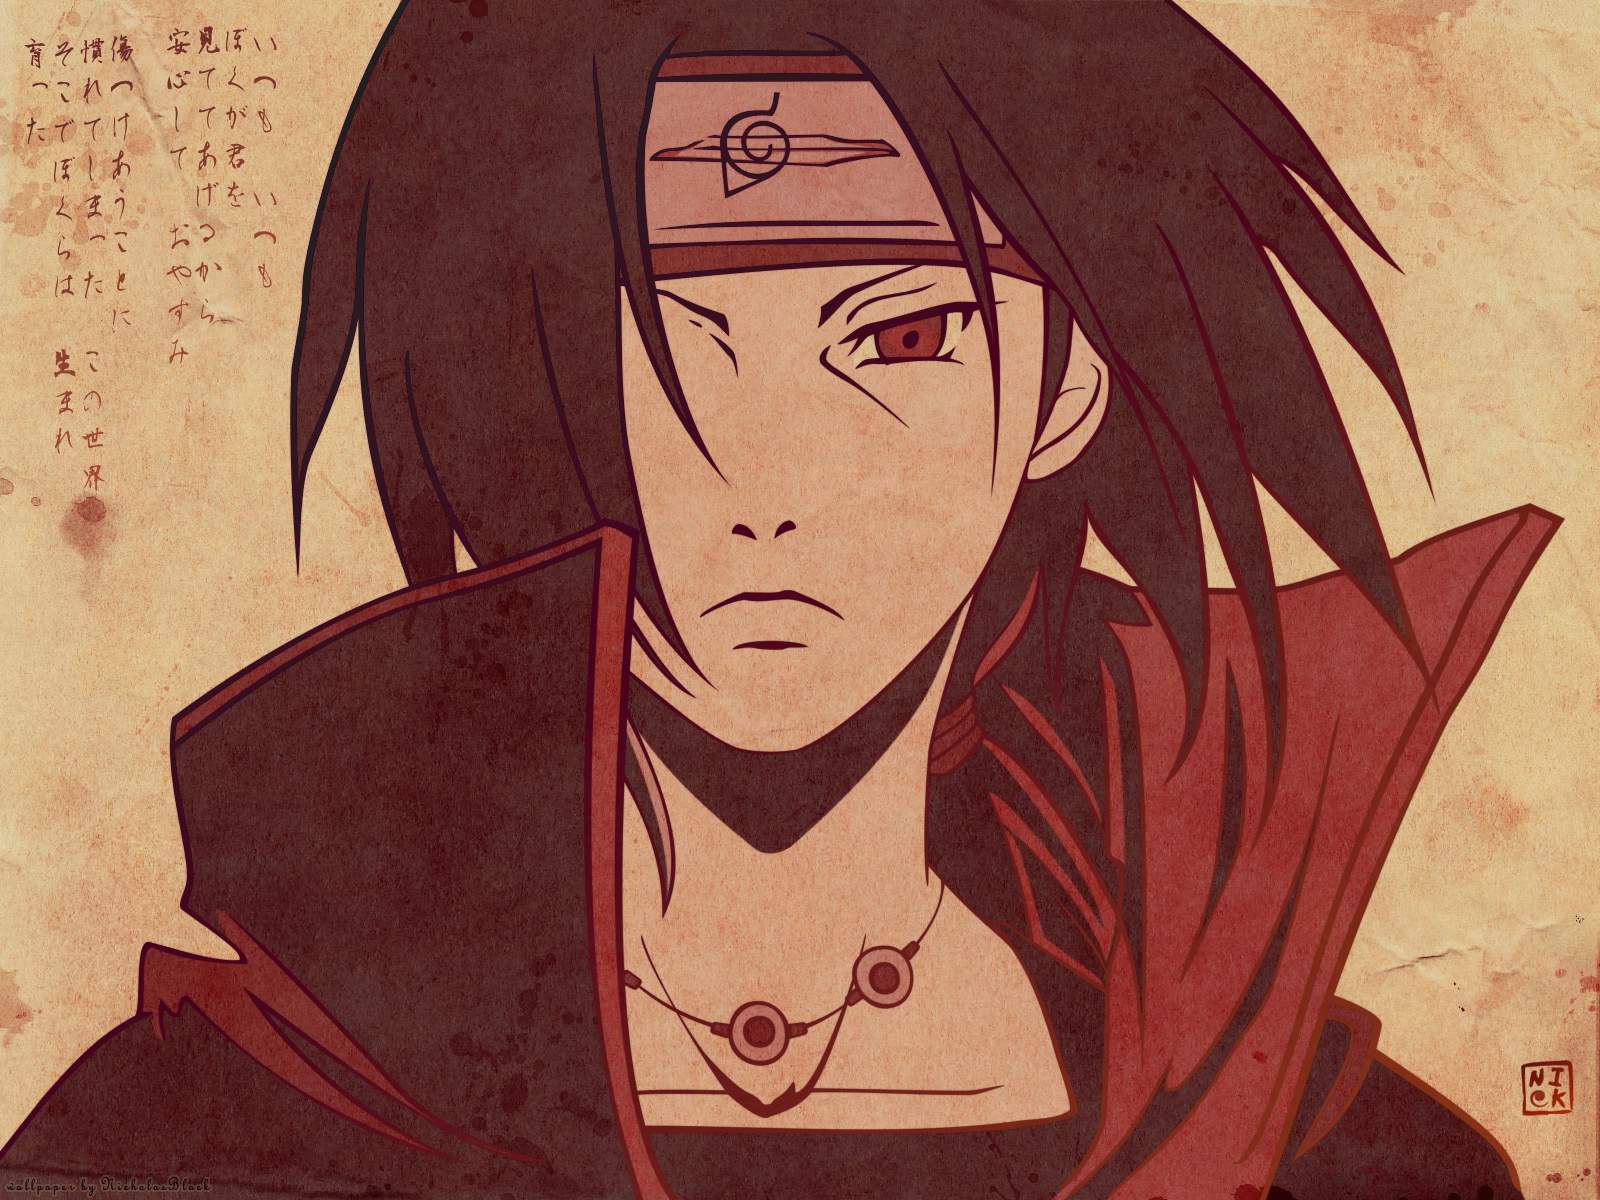 The Naruto Anime Wallpaper Titled Itachi